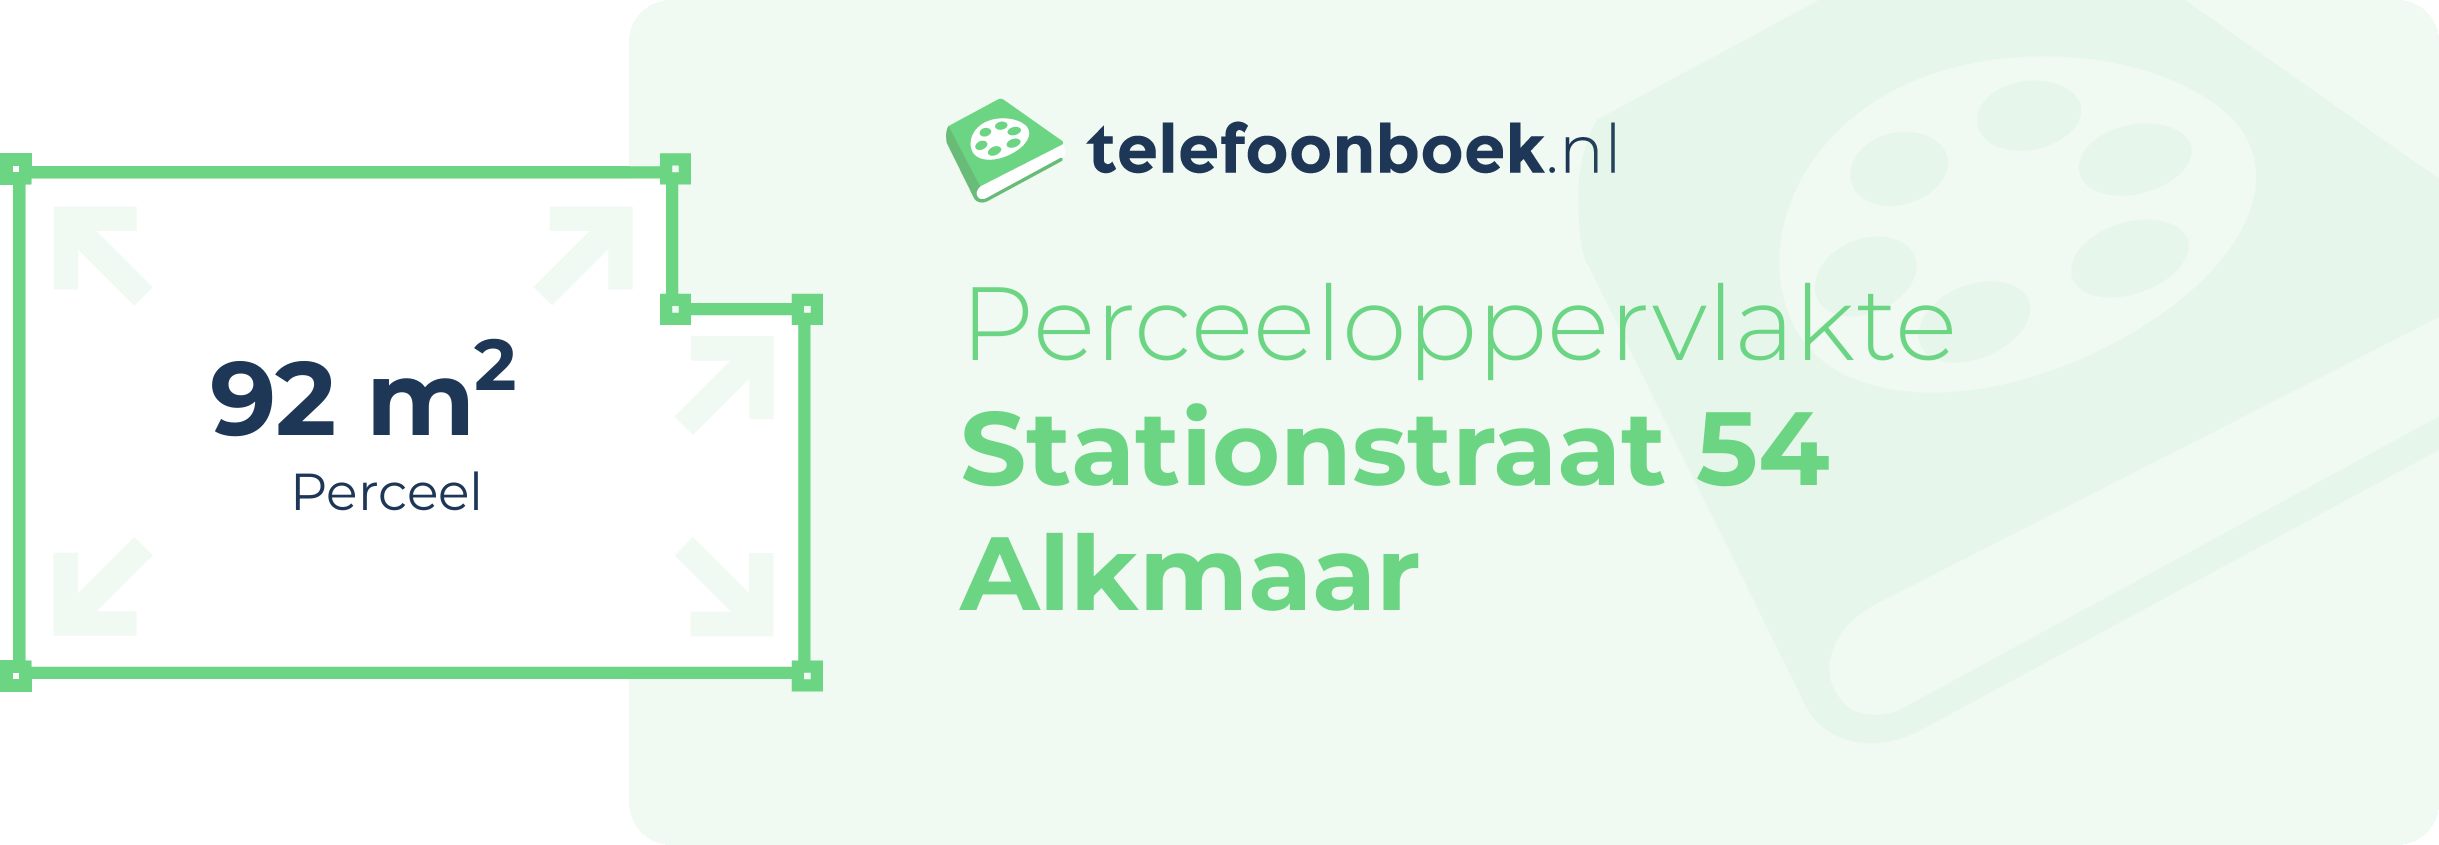 Perceeloppervlakte Stationstraat 54 Alkmaar